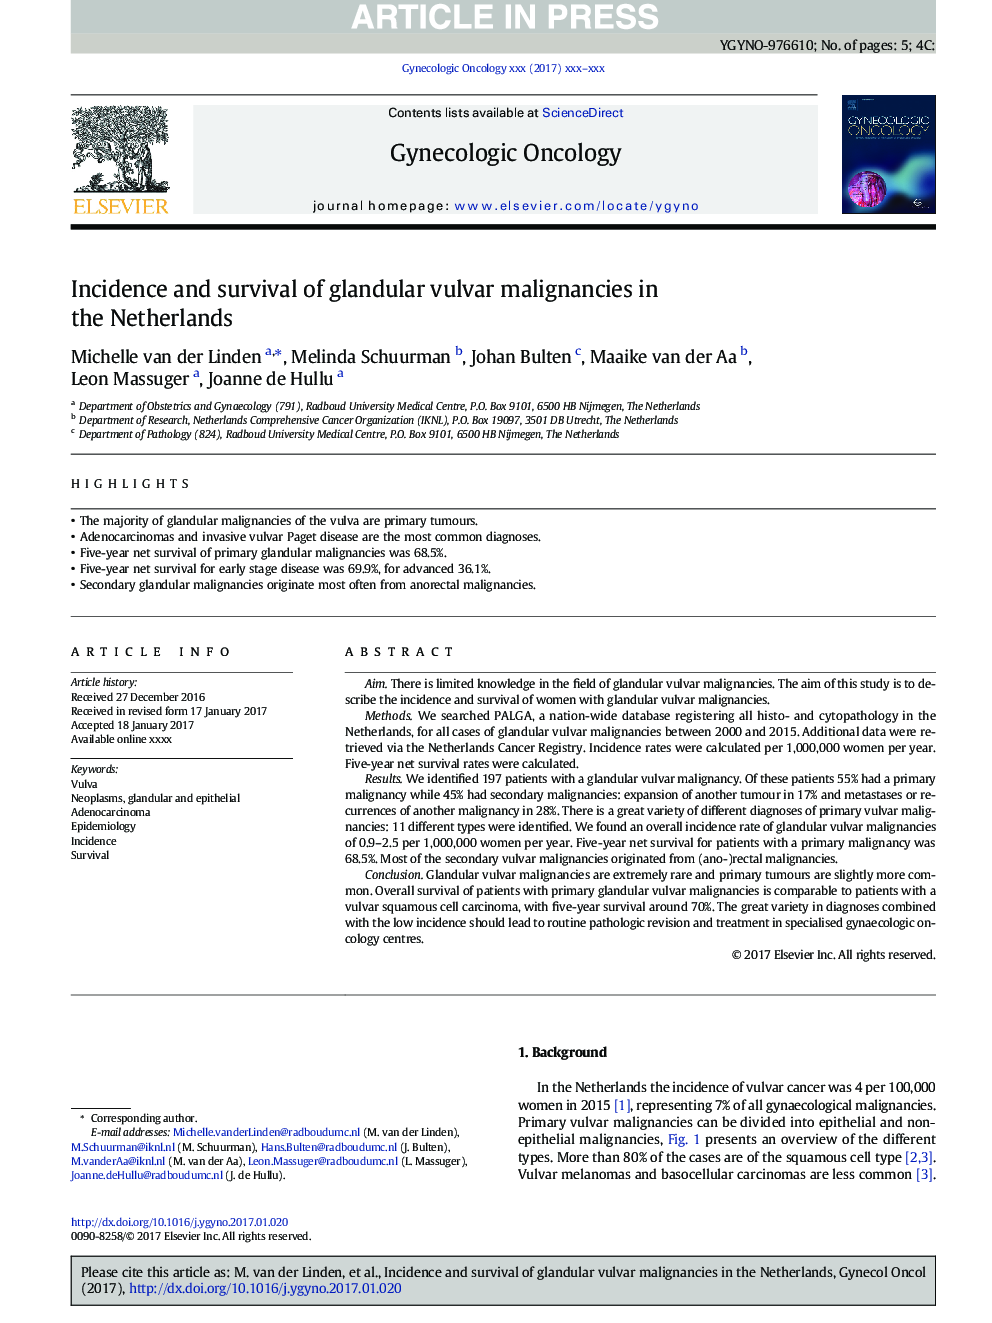 Incidence and survival of glandular vulvar malignancies in the Netherlands